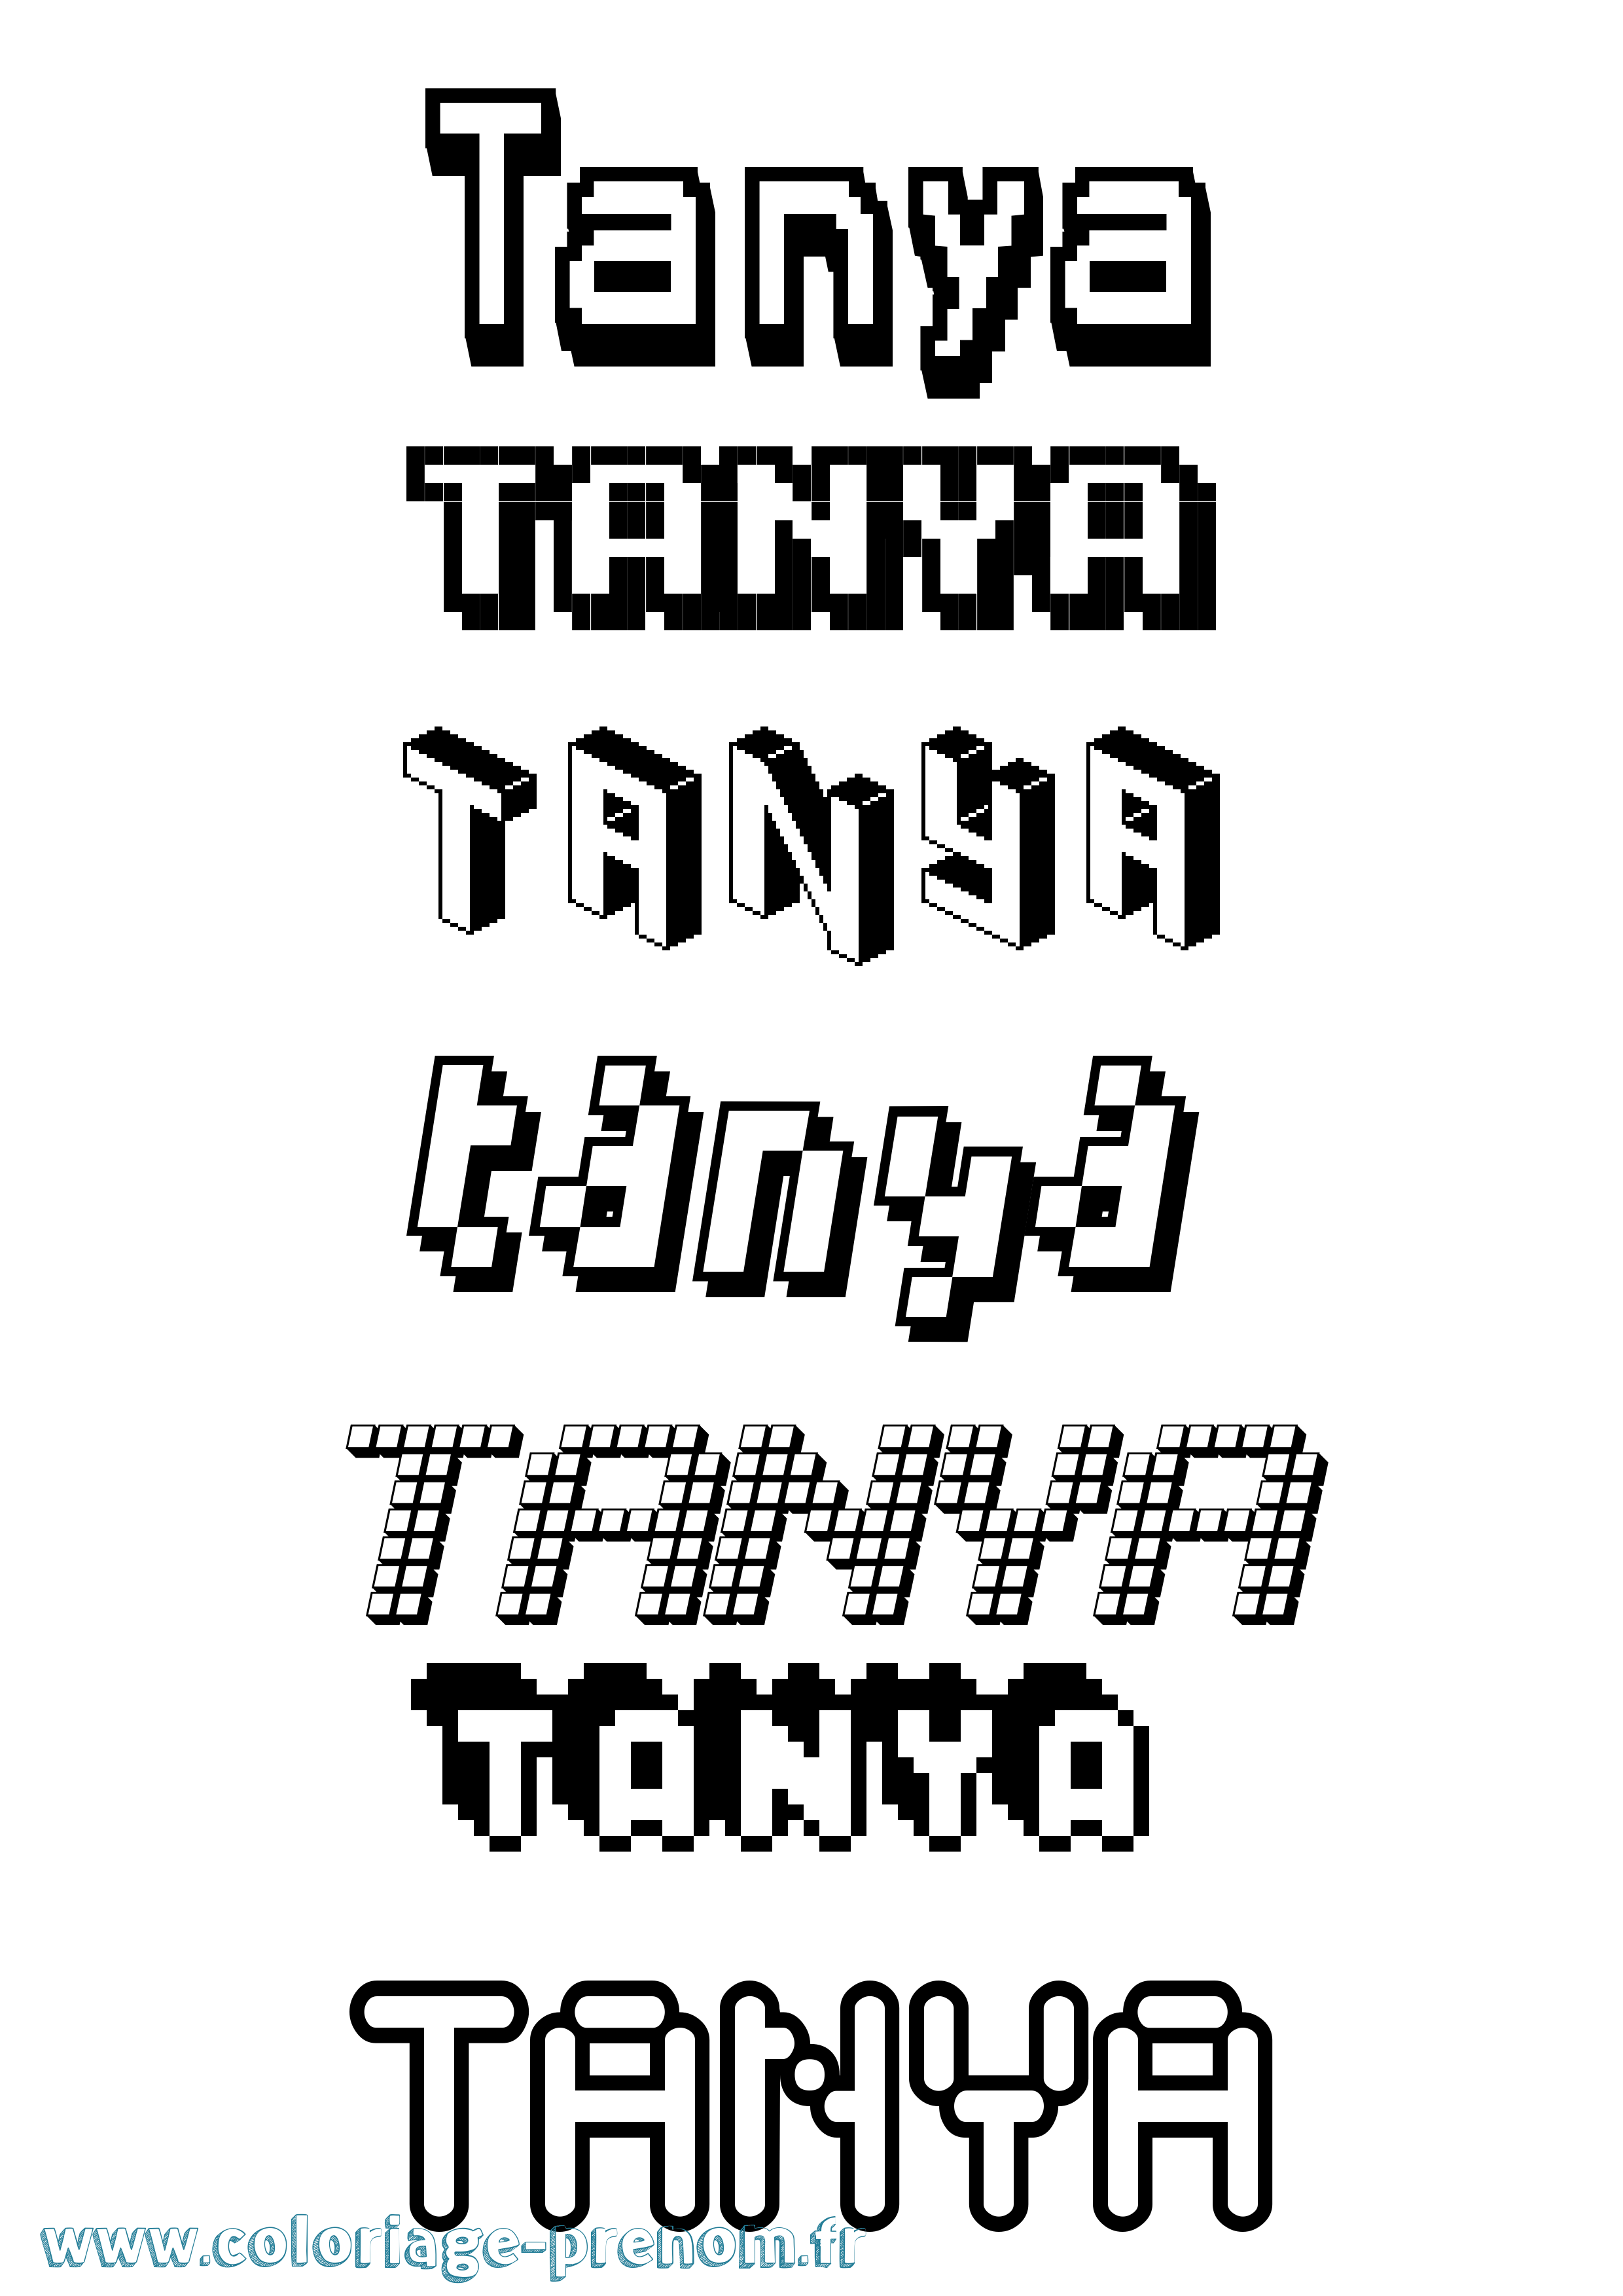 Coloriage prénom Tanya Pixel